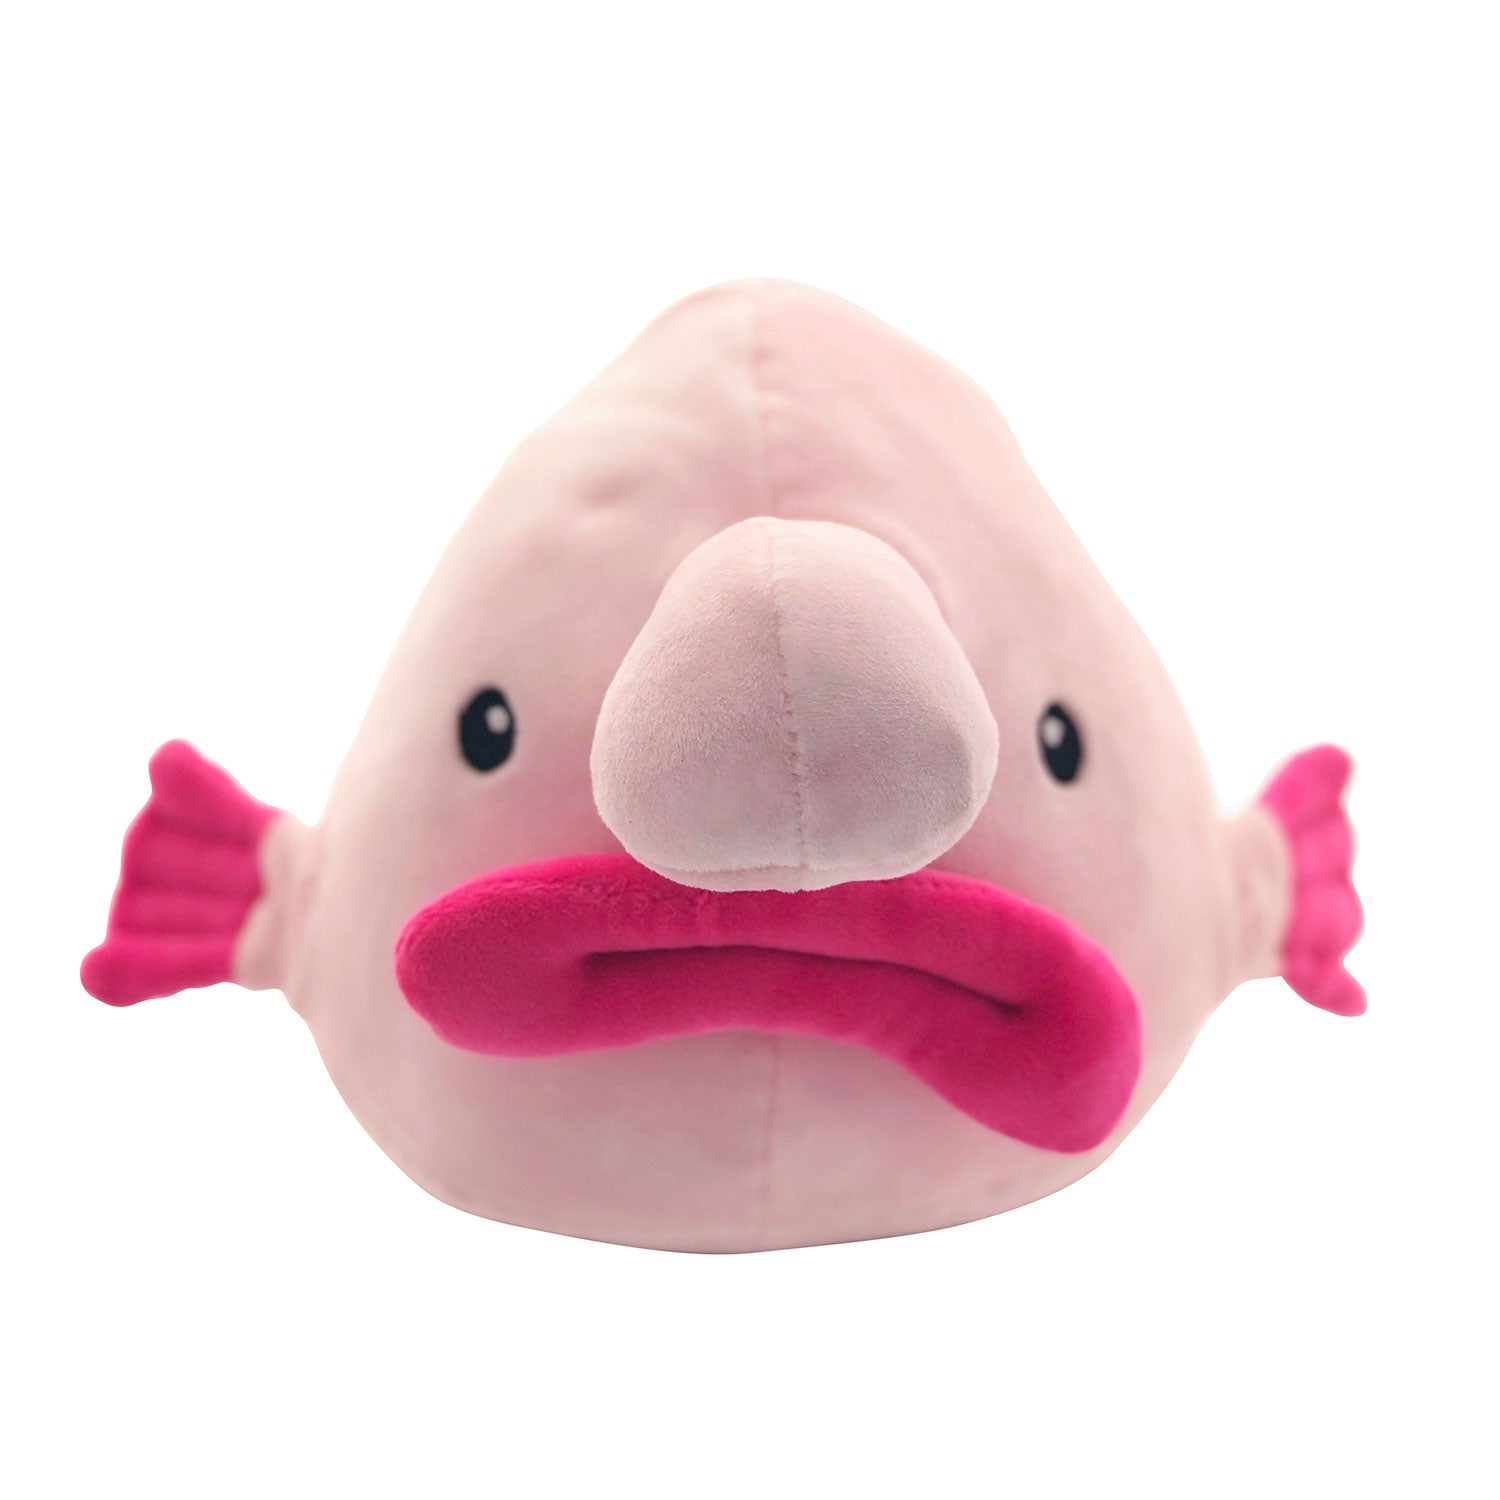 blobfish stuffed animal